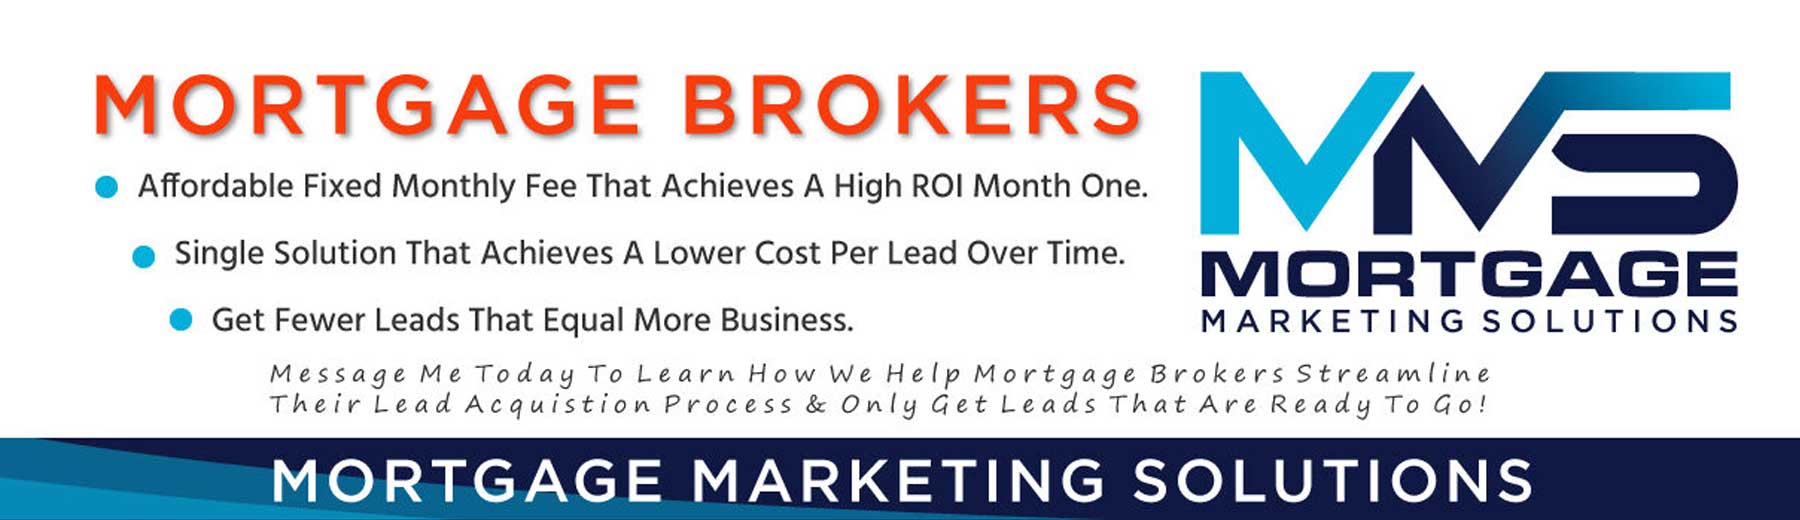 Mortgage Blog Marketing